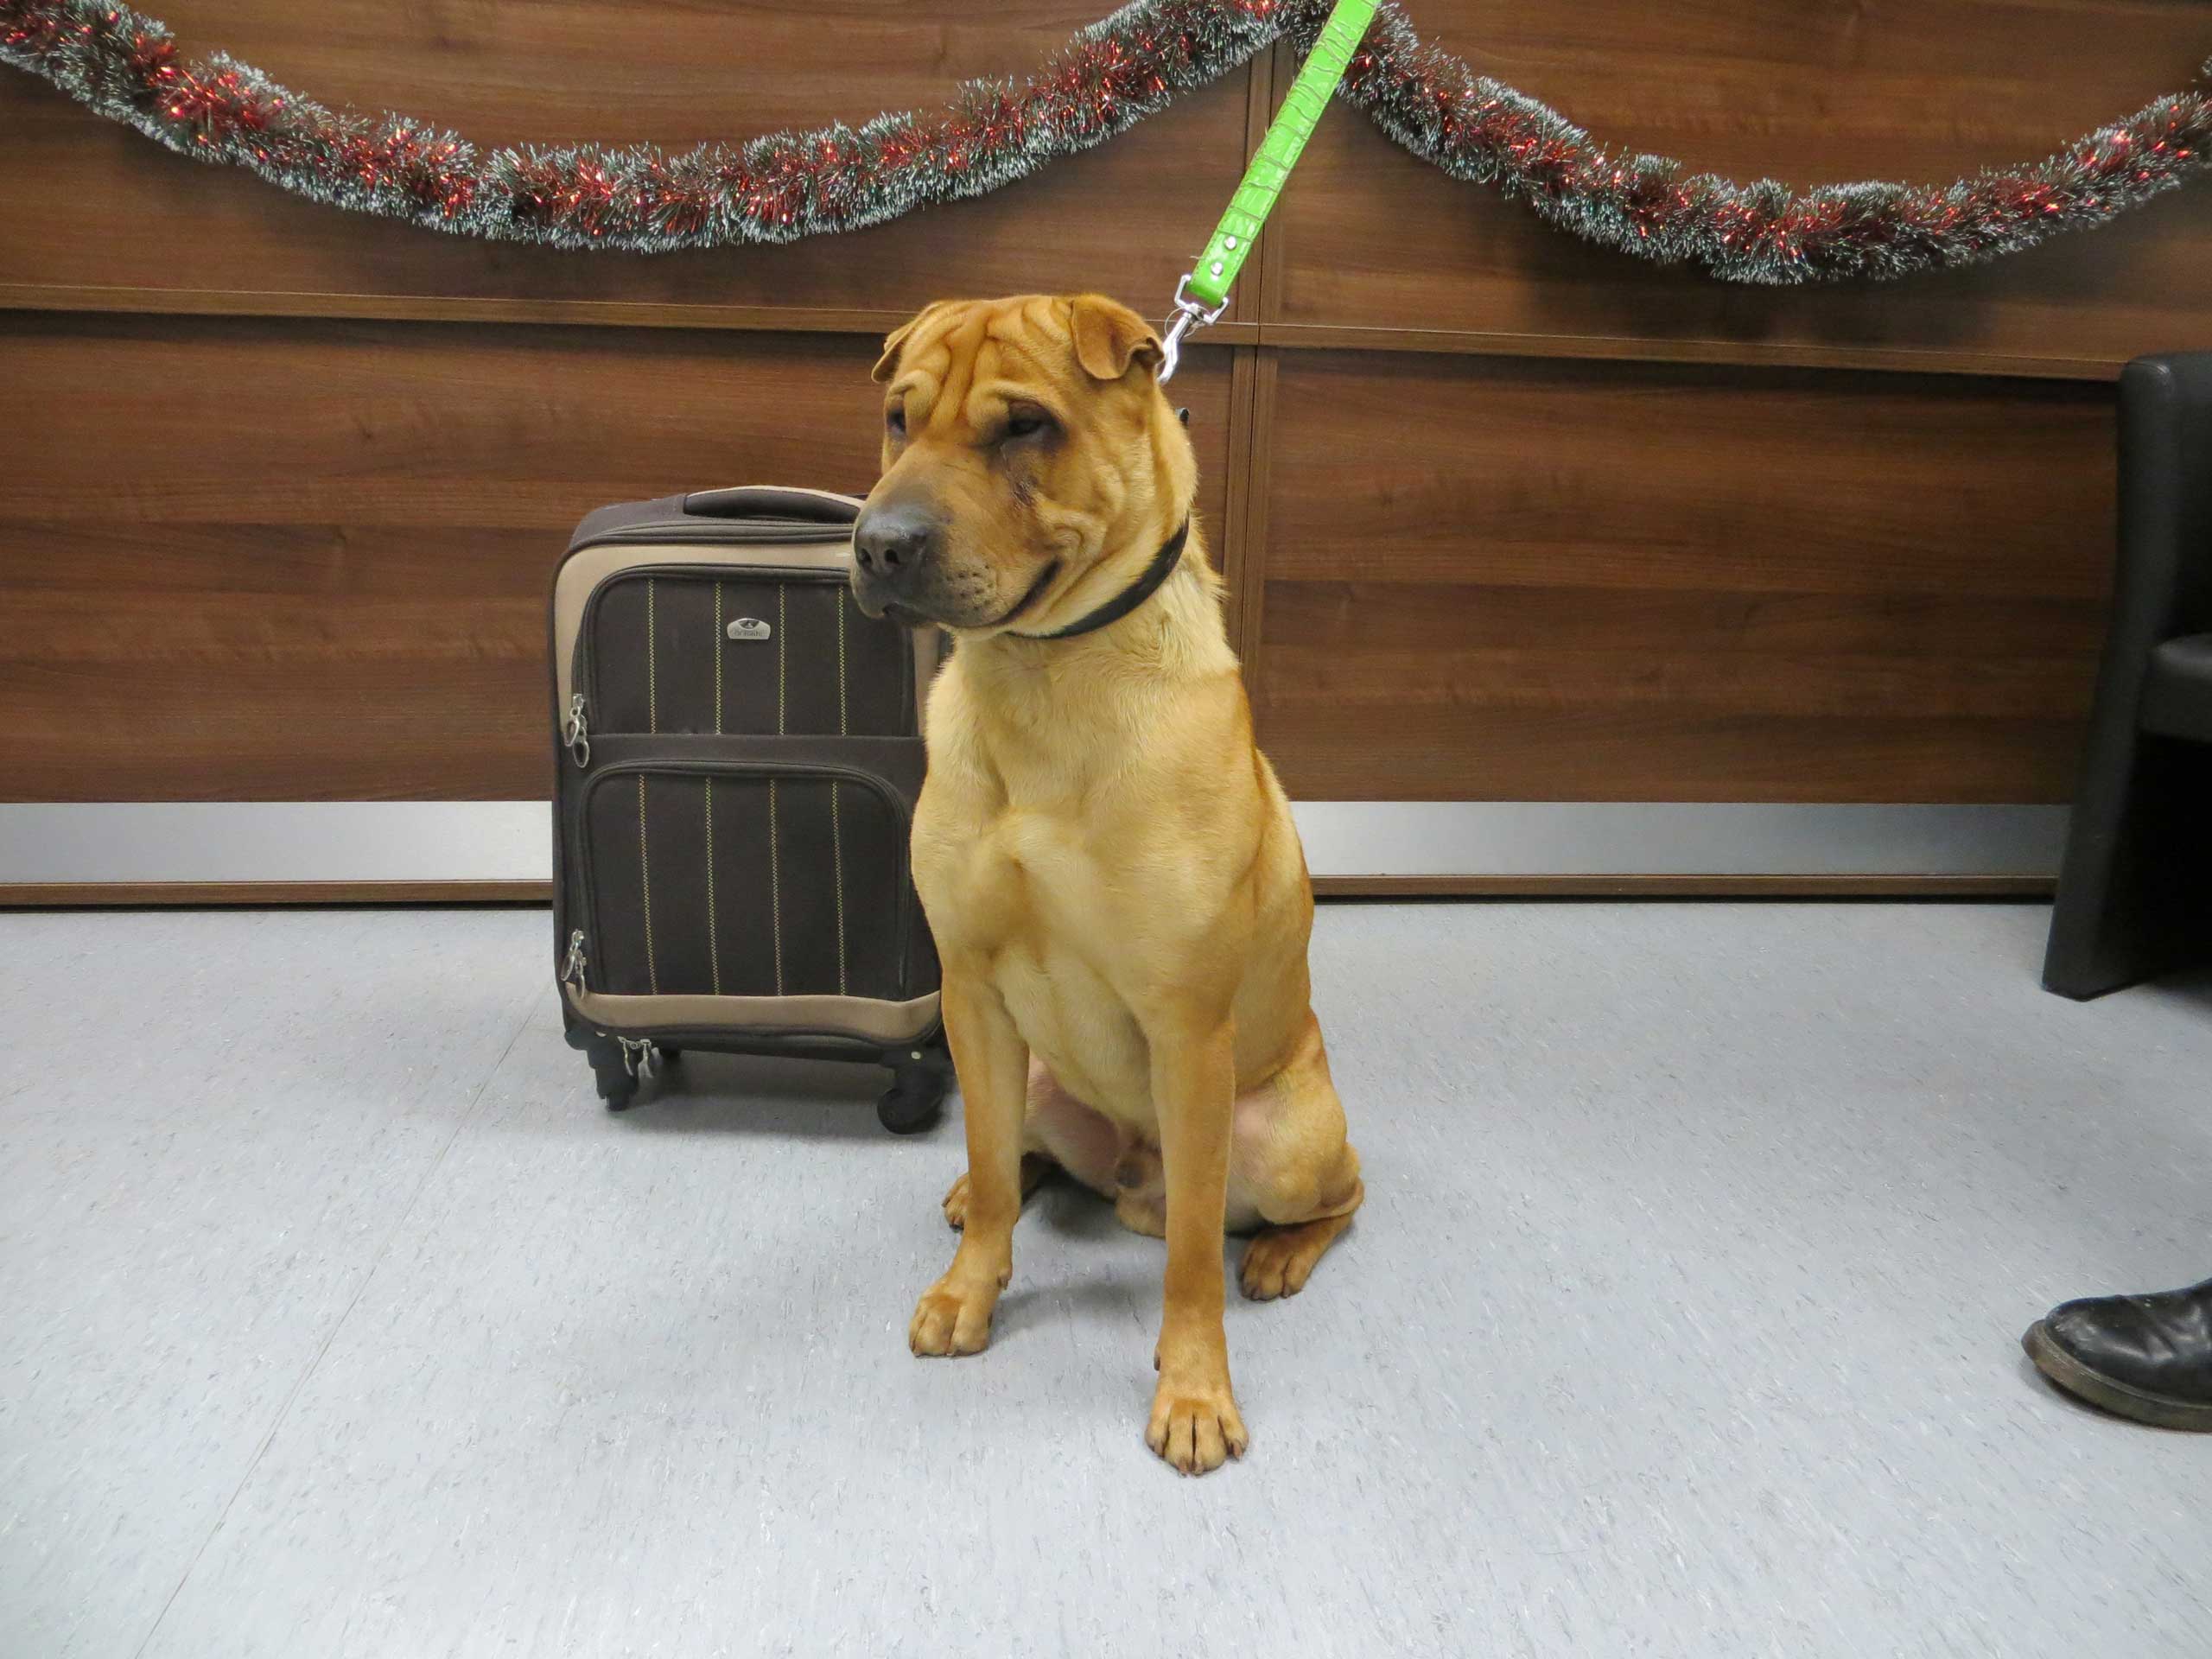 Dog dumped at train station with suitcase, Ayrshire, Scotland, 2 Jan 2015